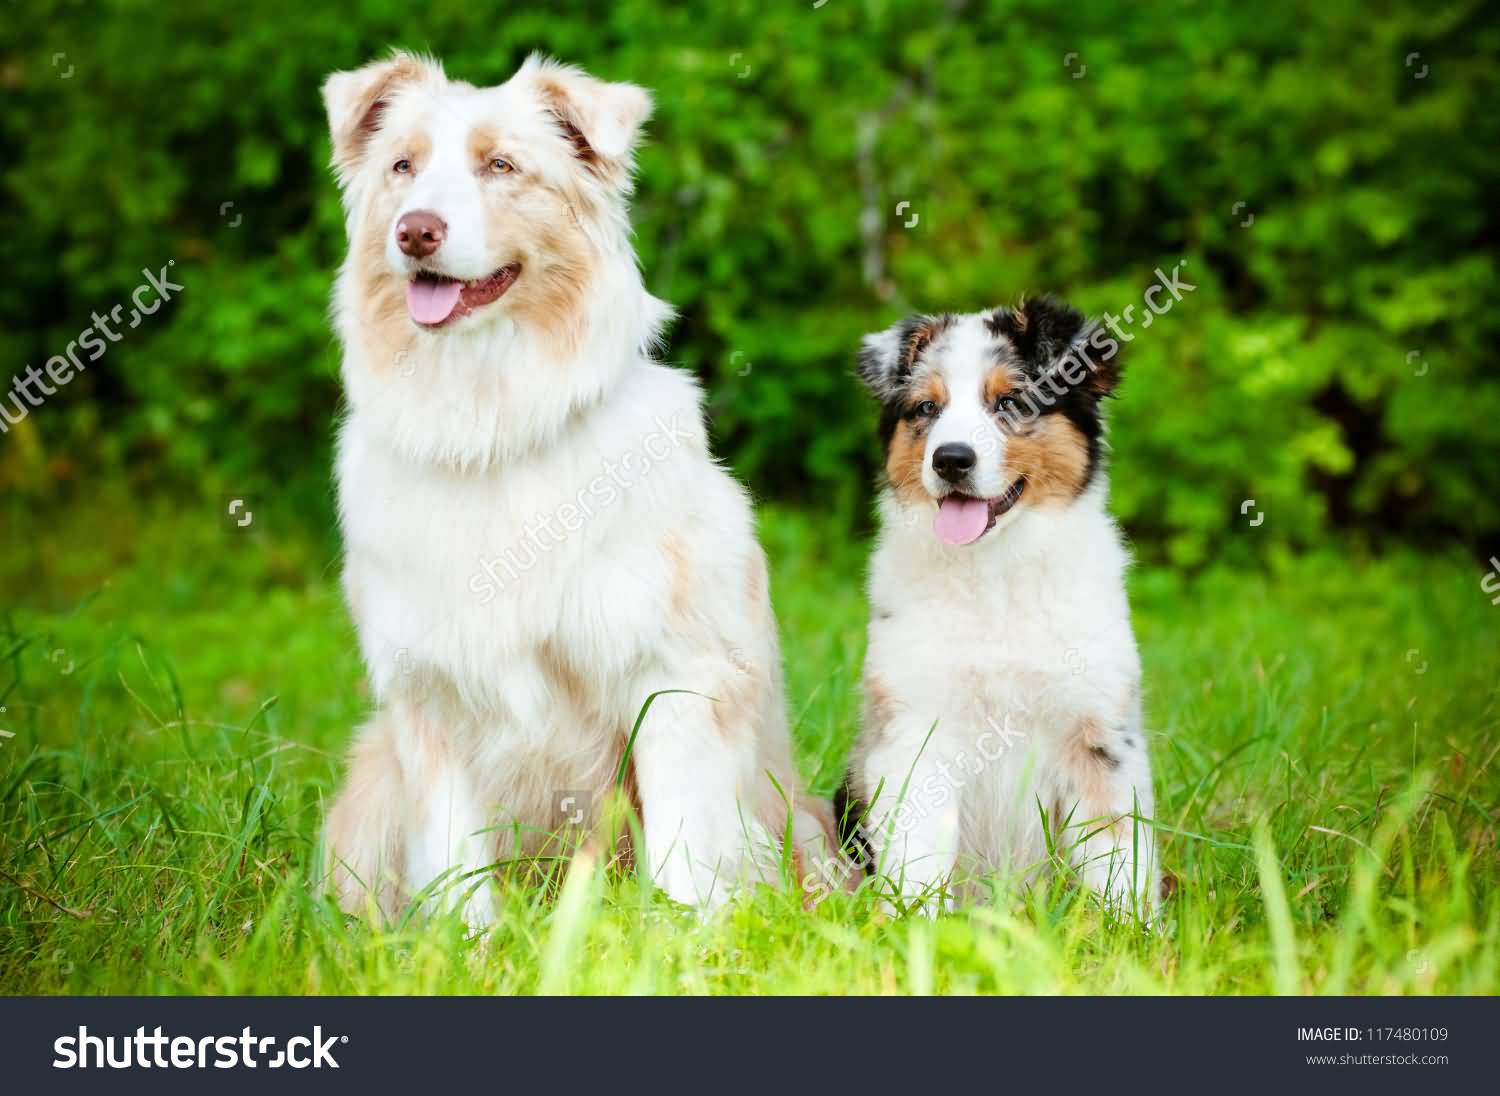 Australian Shepherd Dog And Puppy Sitting